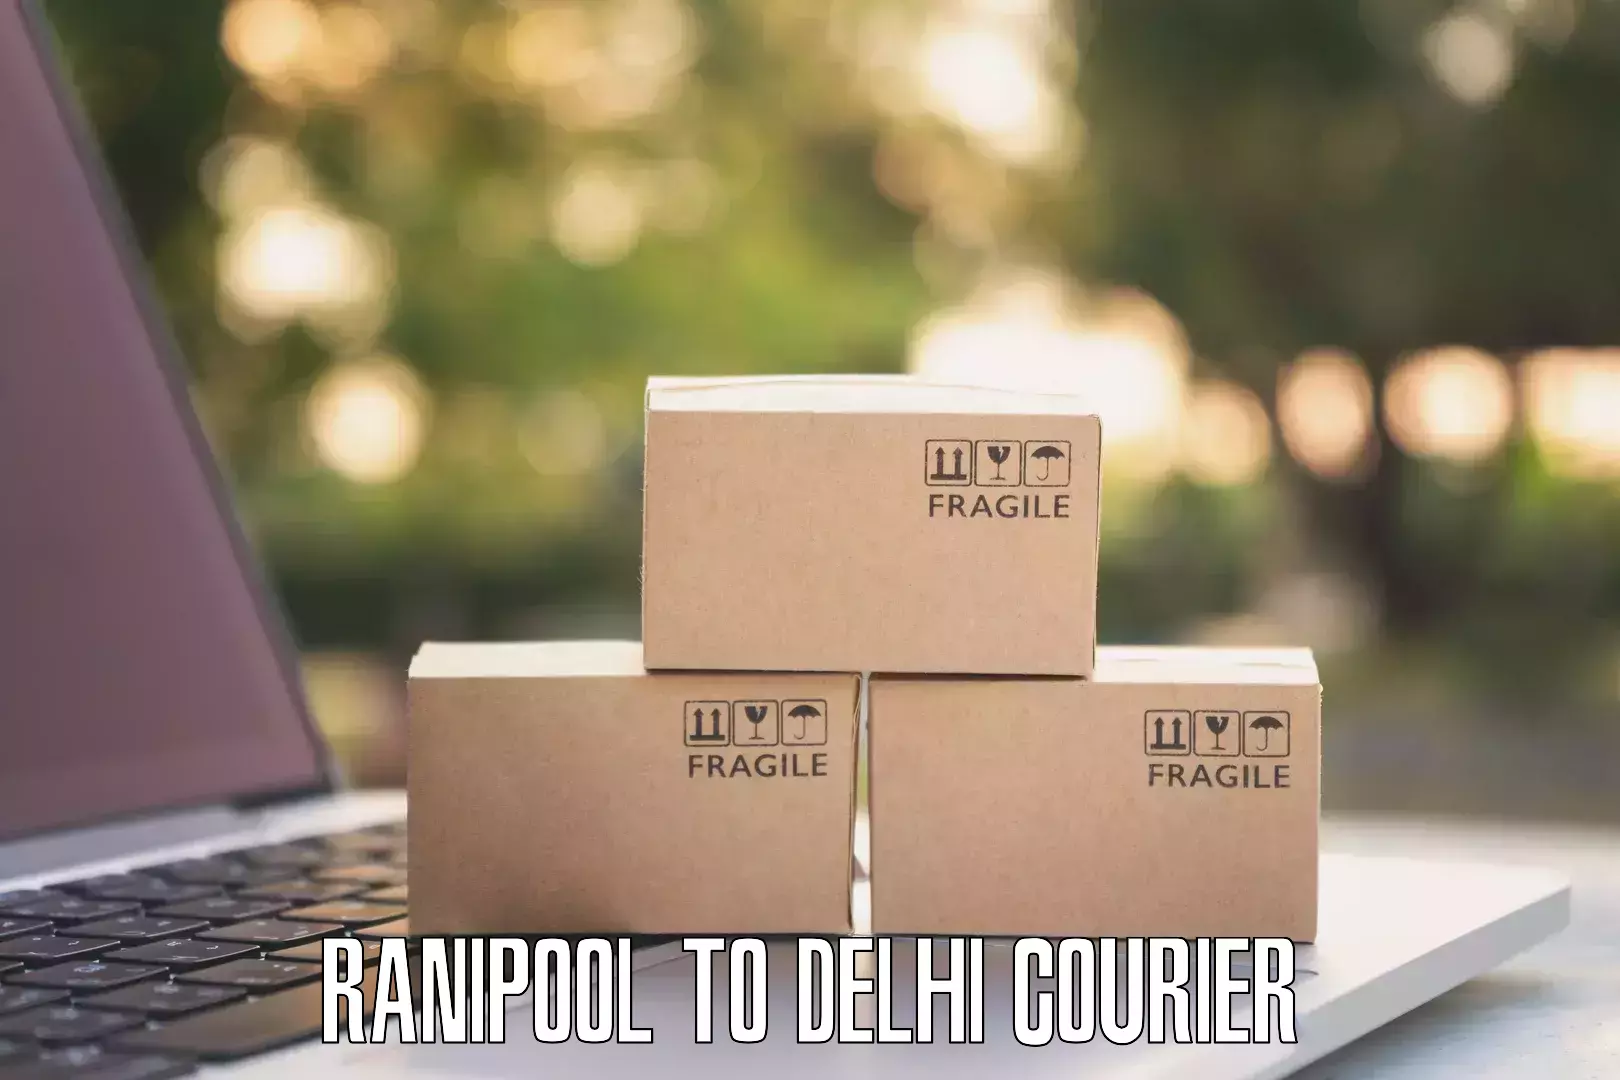 Bulk courier orders Ranipool to Delhi